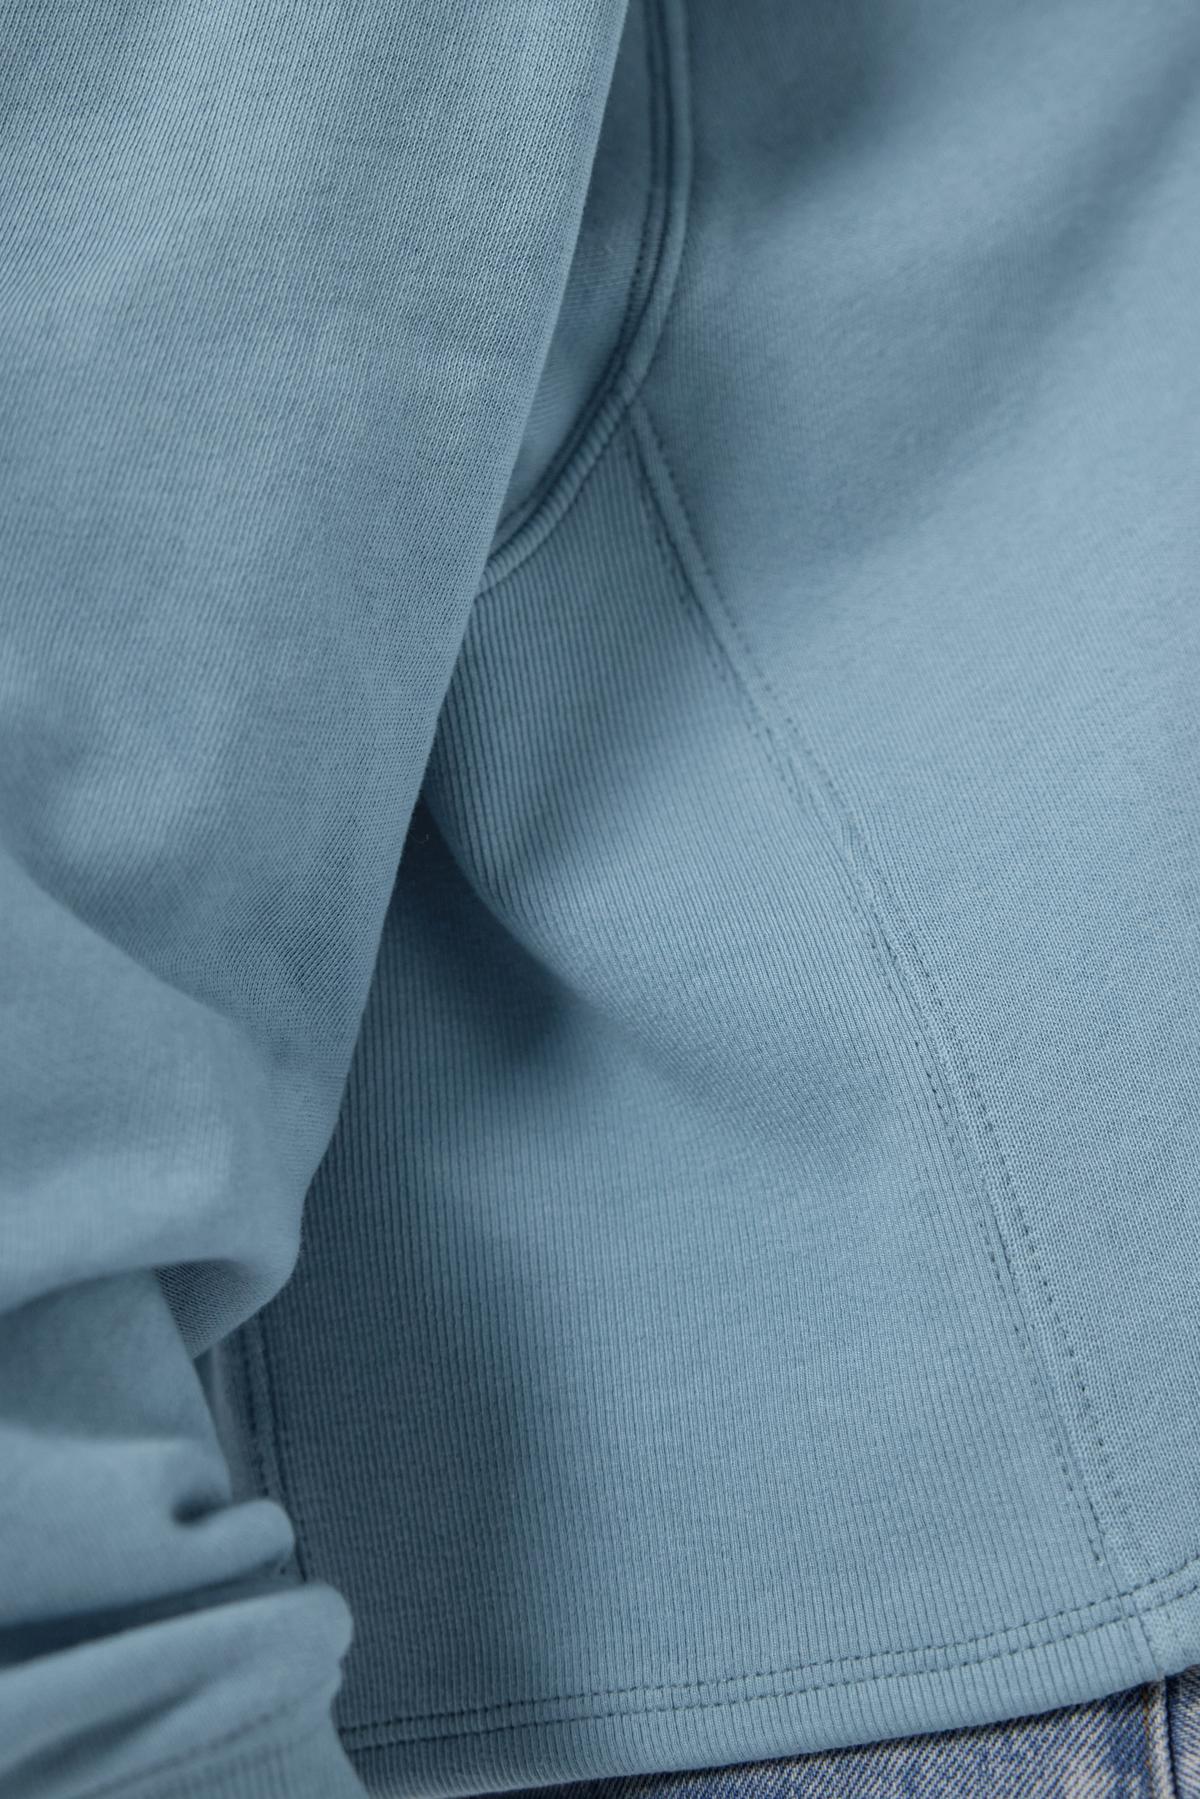   A close up of a blue cropped MALIBU SWEATSHIRT by Velvet by Jenny Graham. 